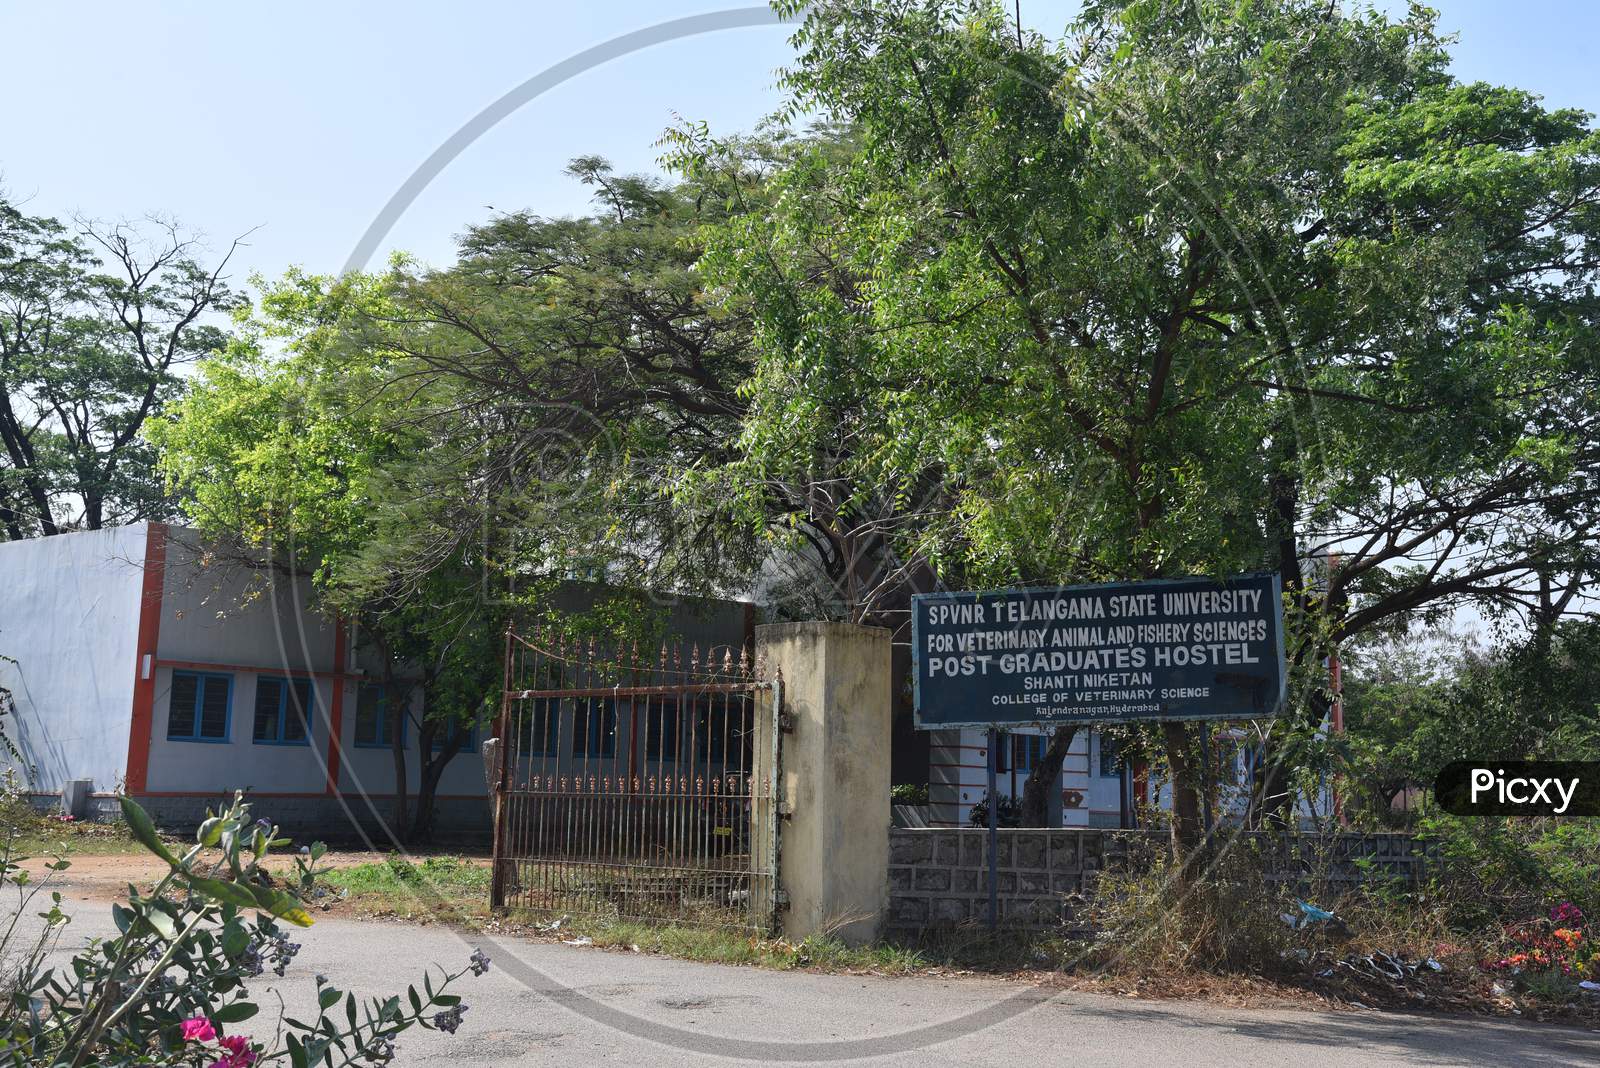 Shanthinikethan PG Hostel In SPVNR Telangana State University